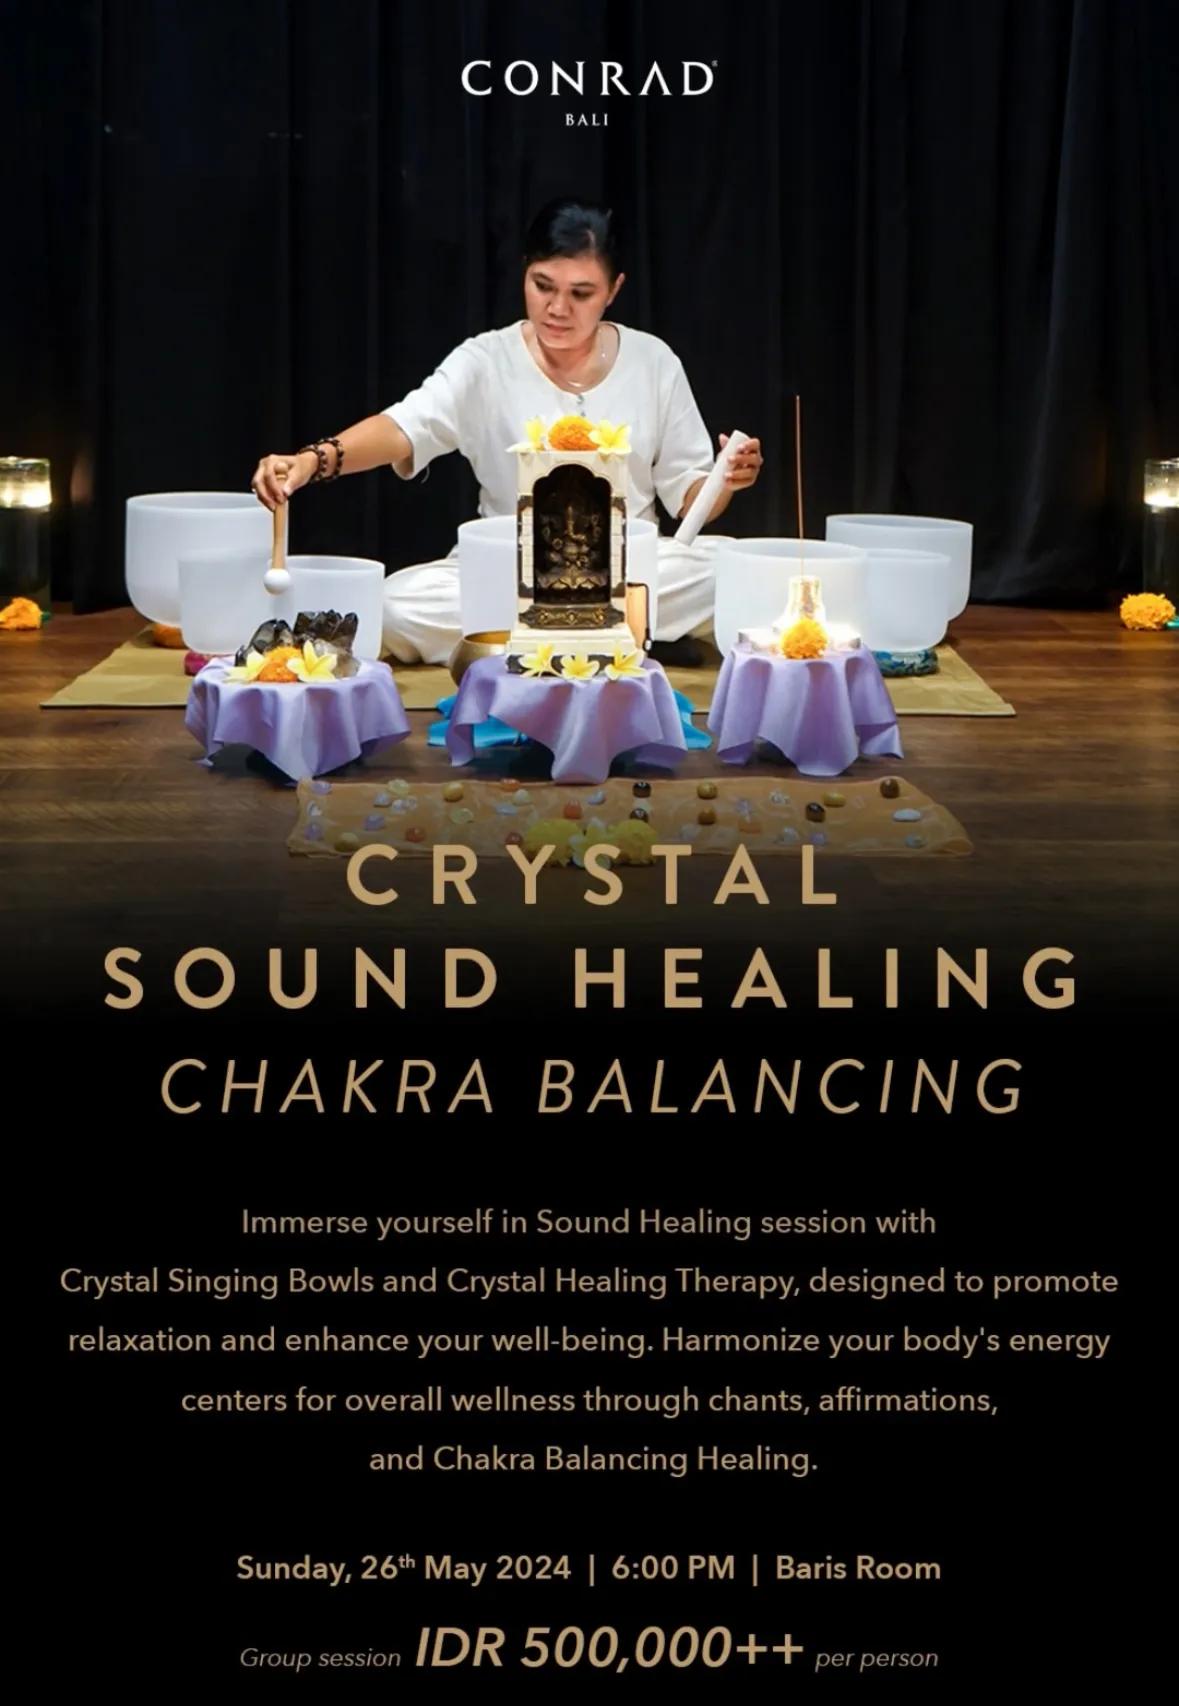 Event at Conrad on May 26 2024: Crystal Sound Healing